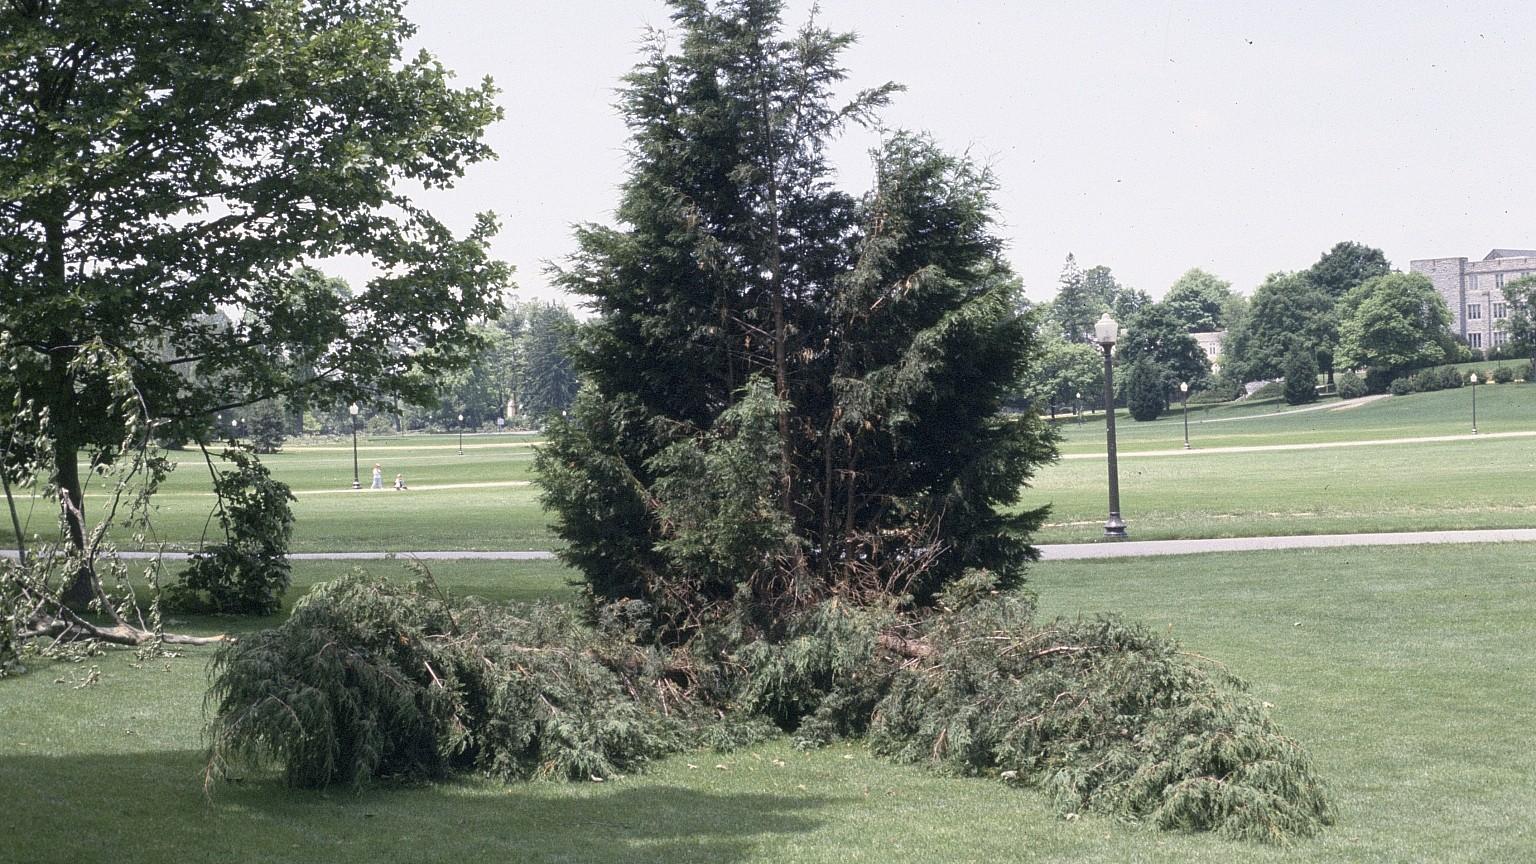 storm damage - broken tree branches